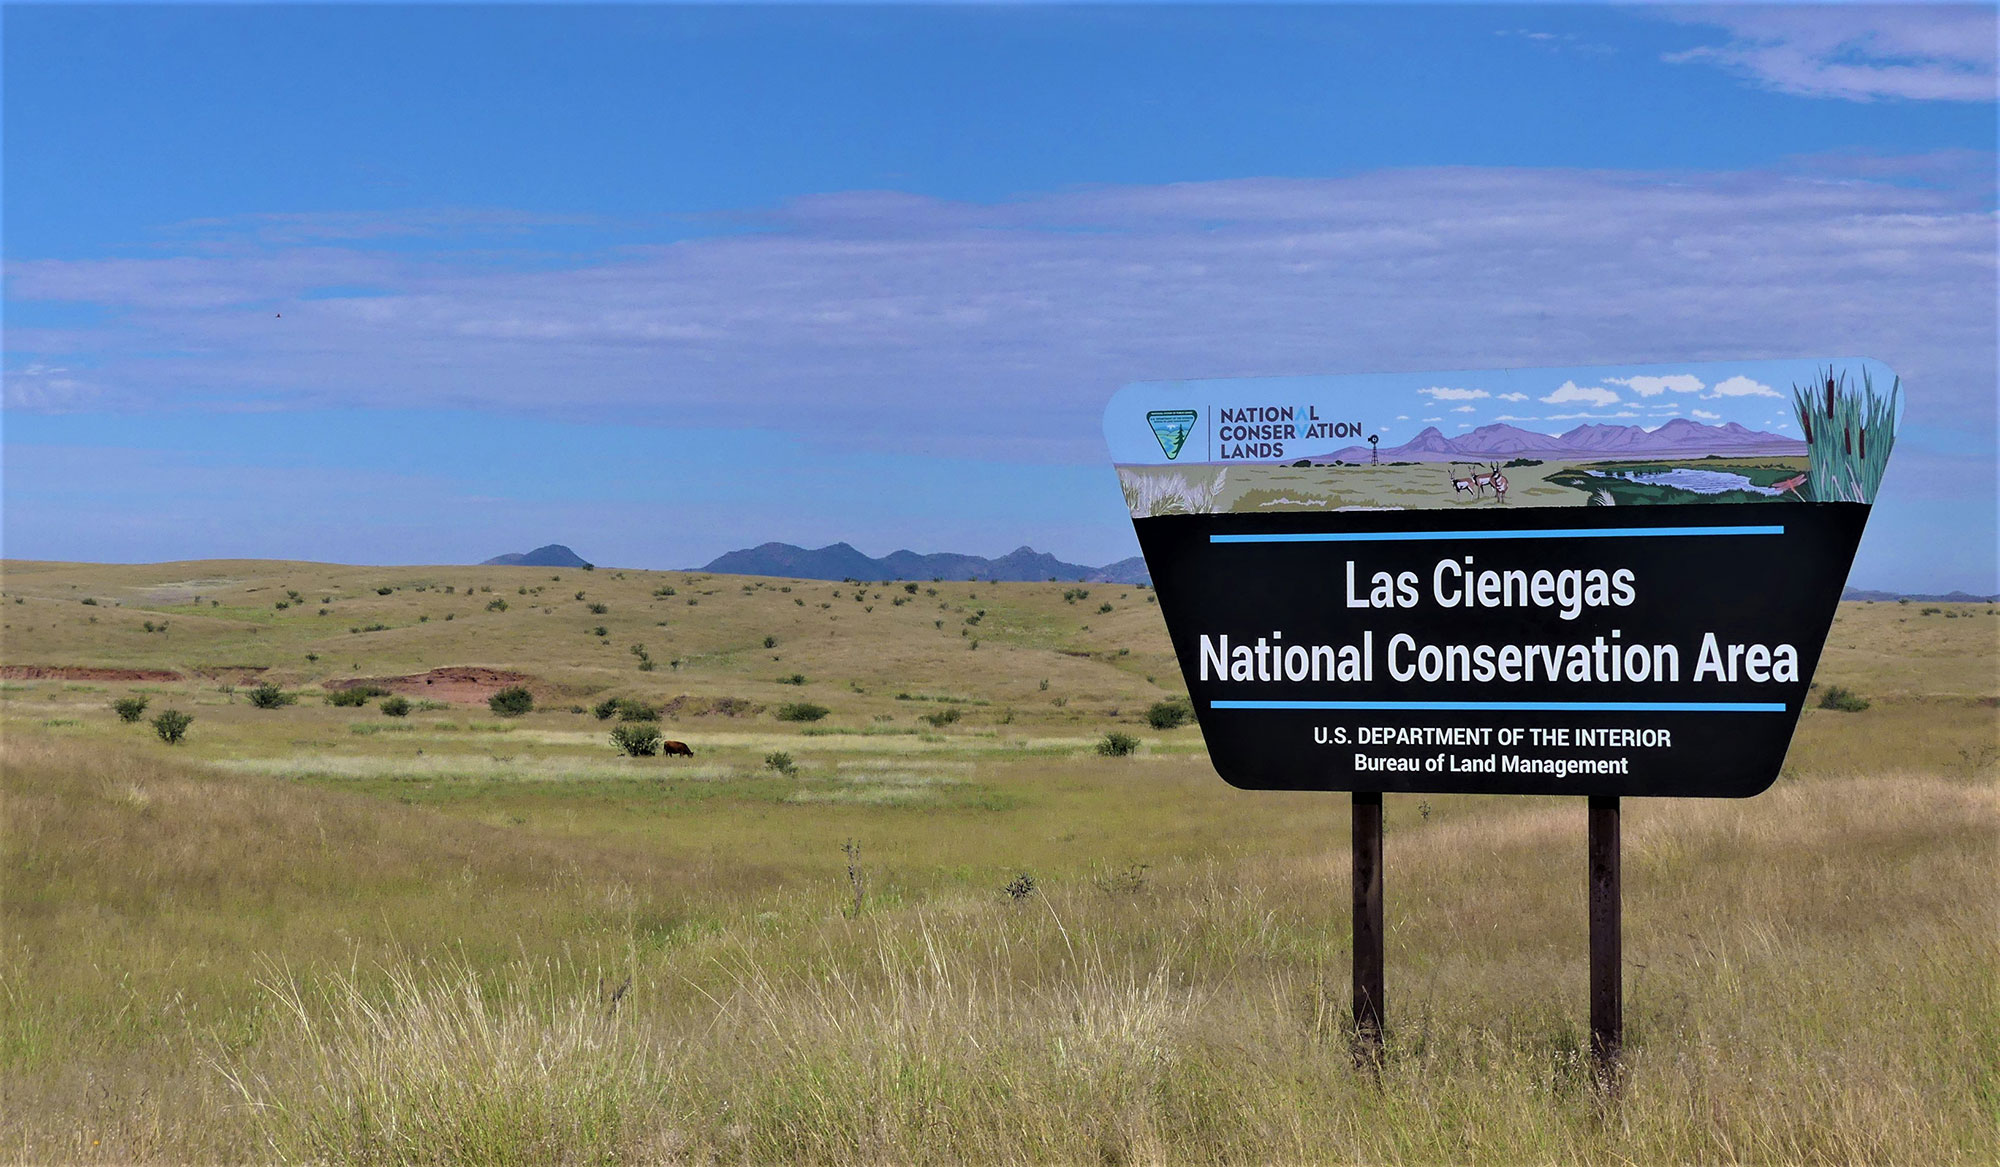 Explore Las Cienegas National Conservation Area